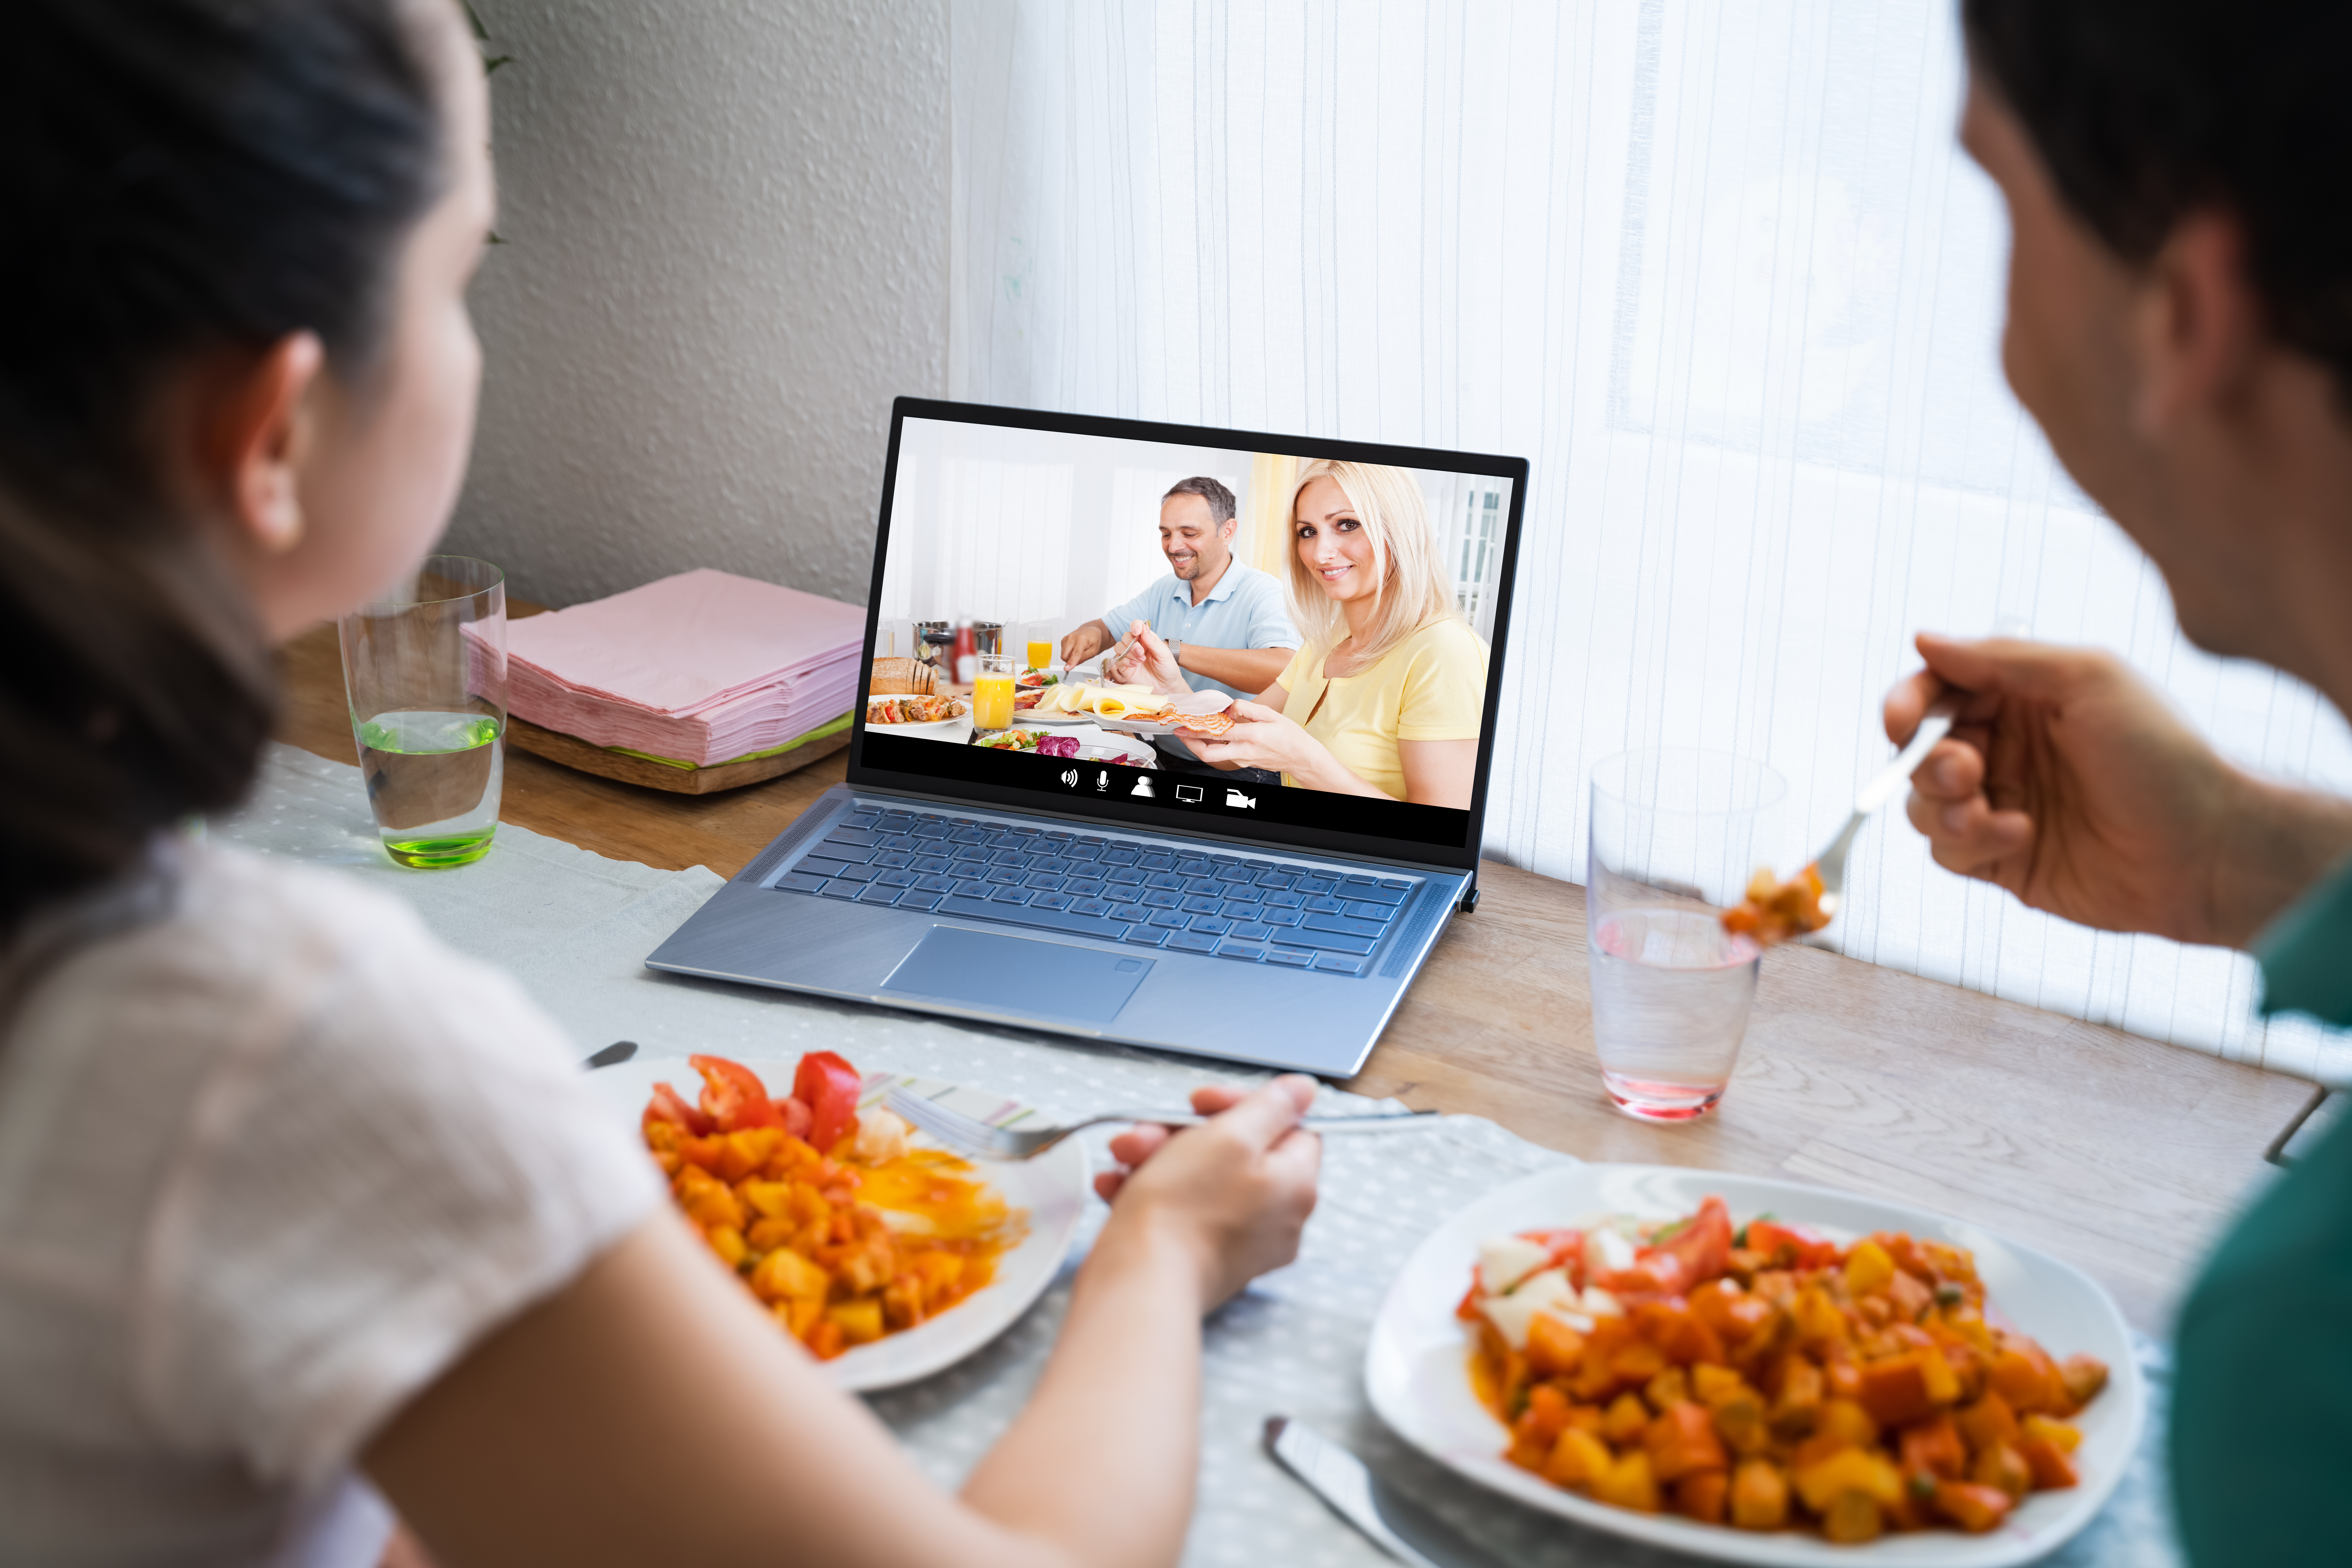 Eat Together as Digital Missionaries